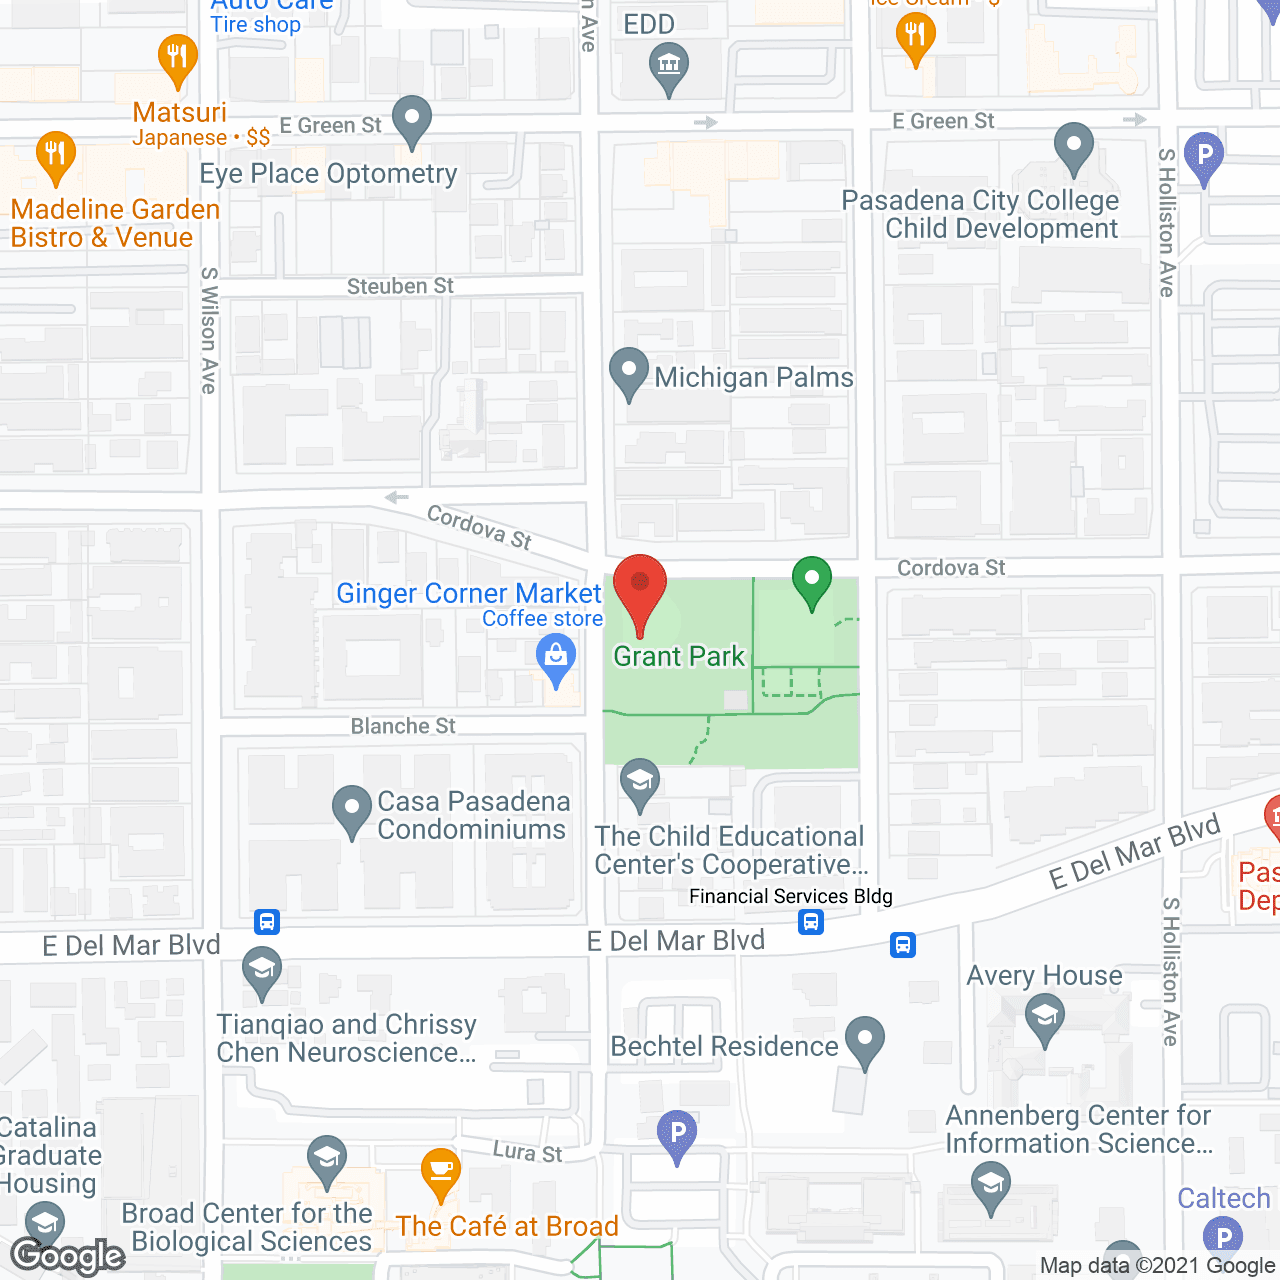 Select Home Care - Pasadena in google map